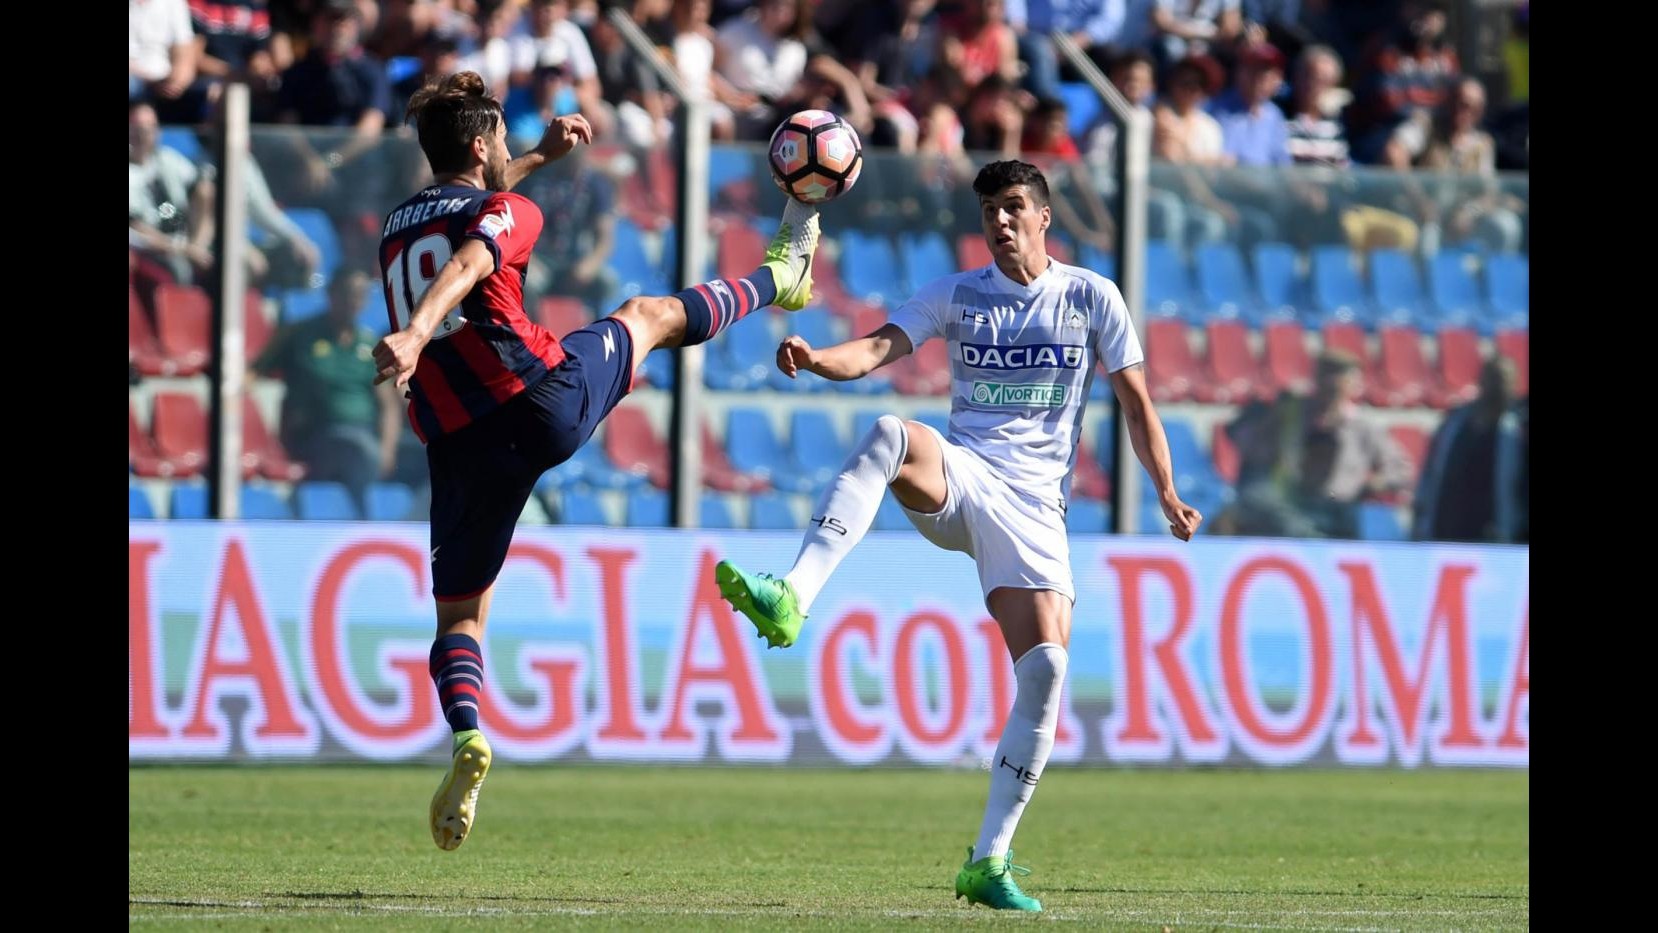 FOTO Serie A, Crotone batte Udinese 1-0: decide Rohden